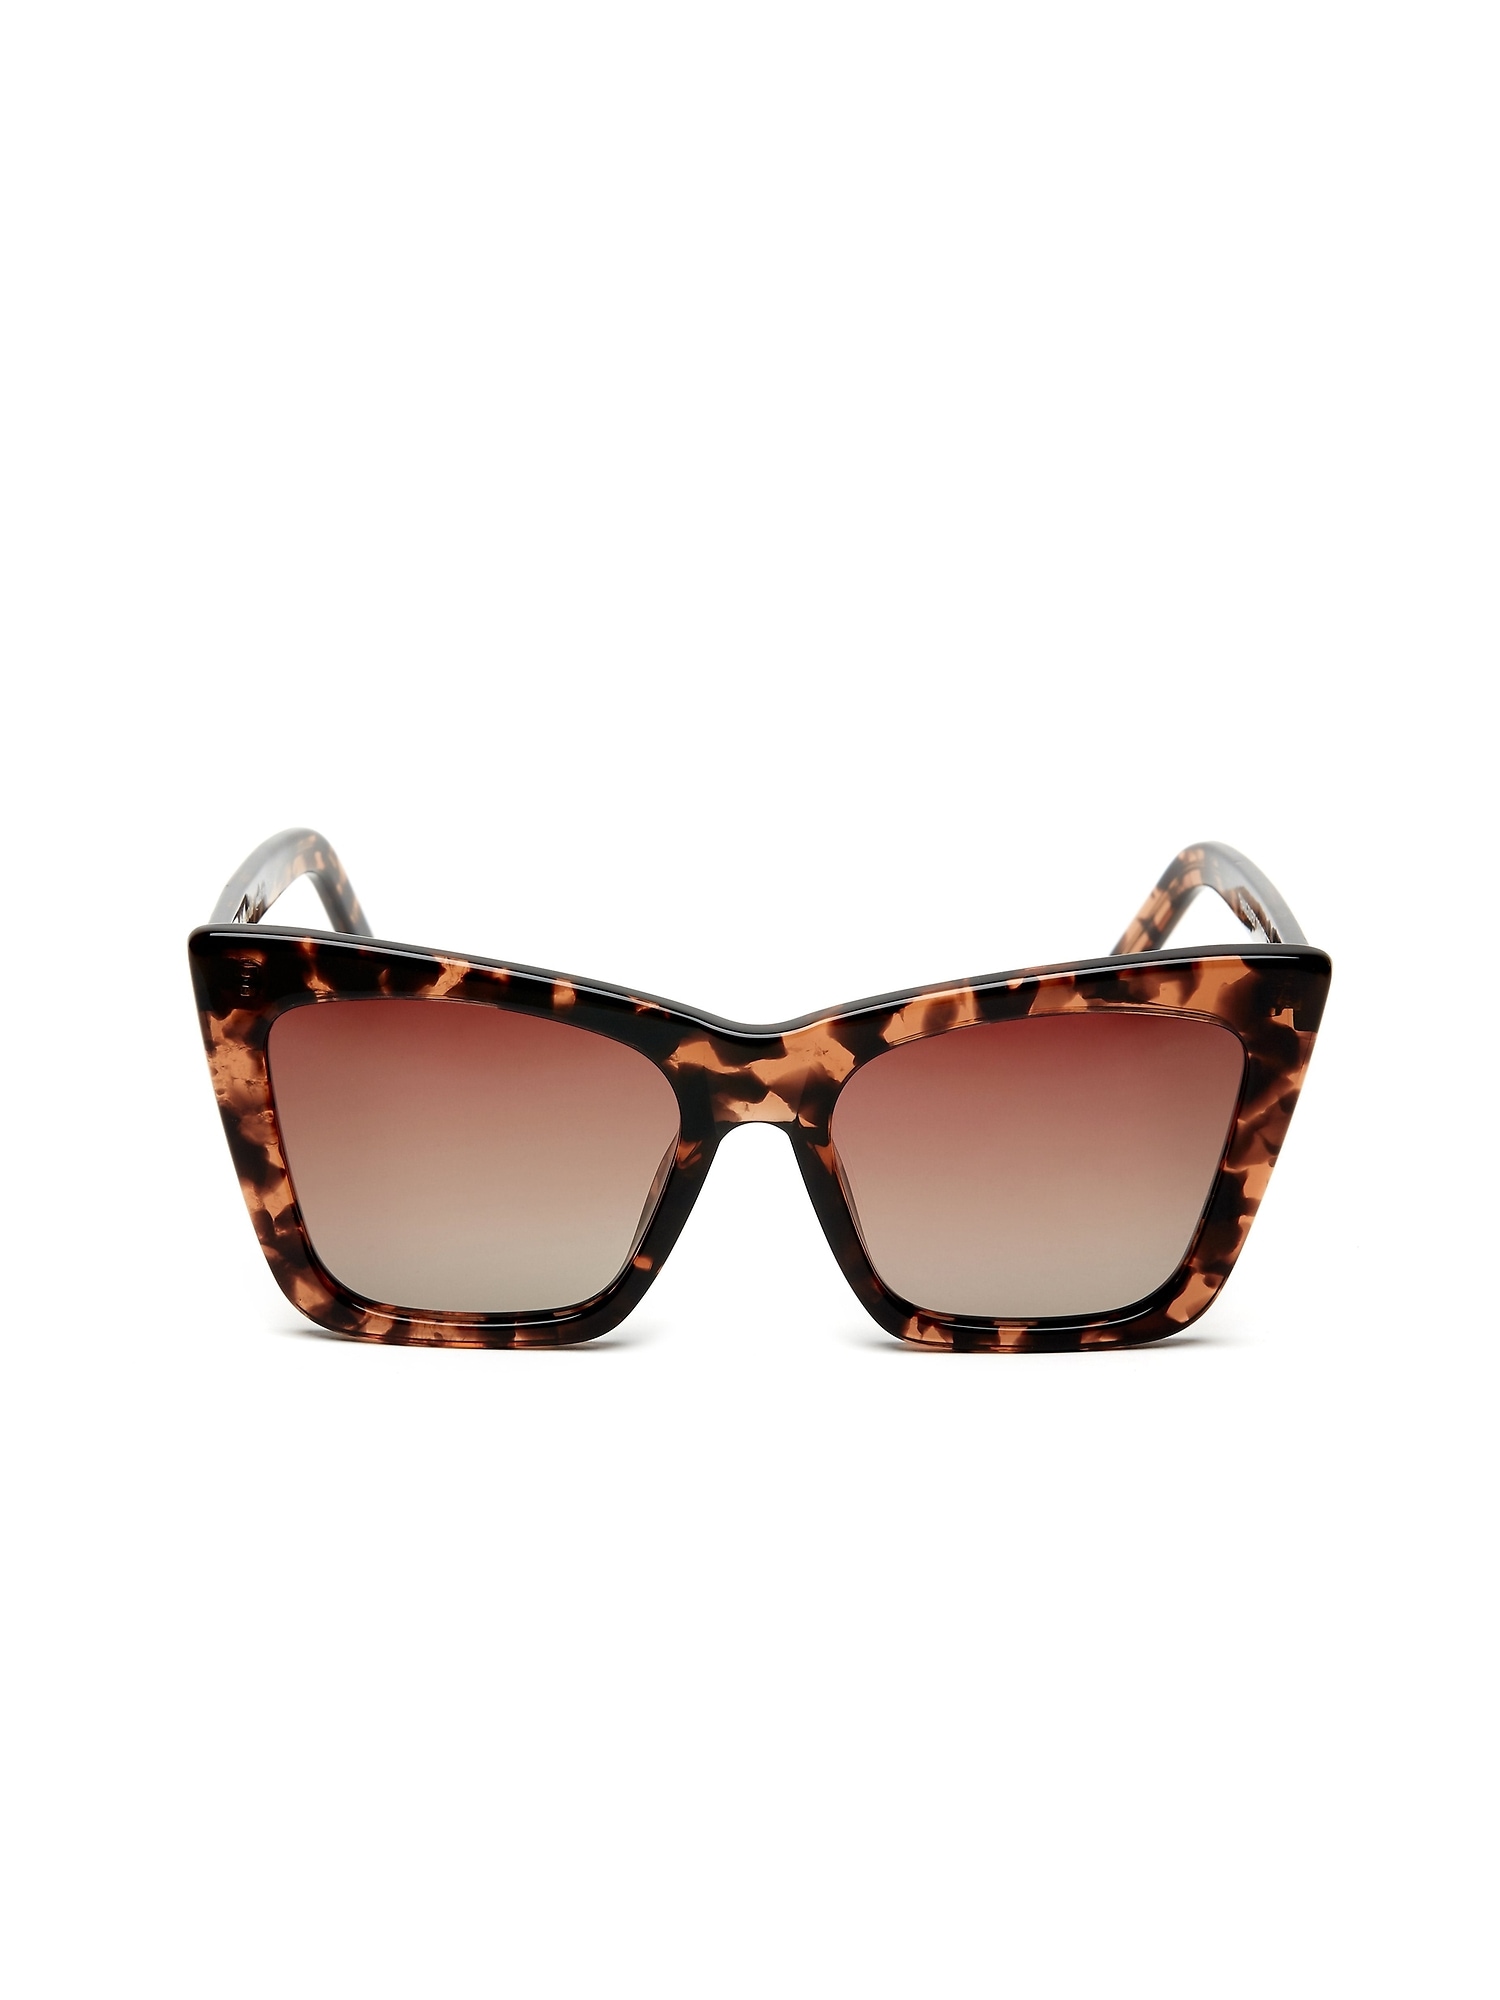 Gap Cateye Oversized Sunglasses